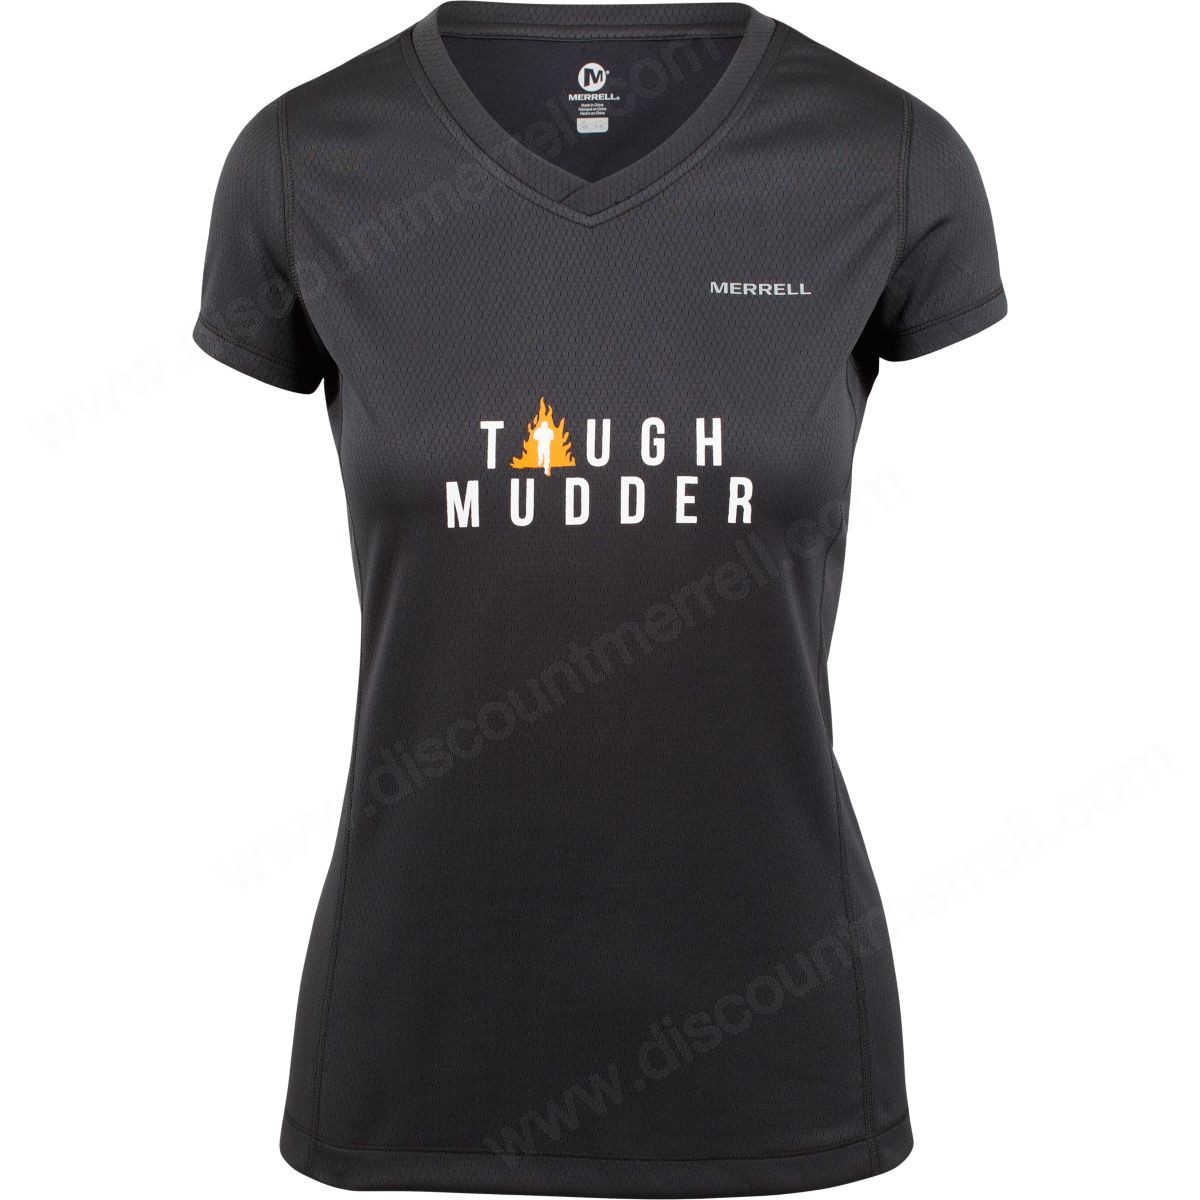 Merrell Woman's Tough Mudder Fastrex Short Sleeve Tech Shirt Black/white - -0